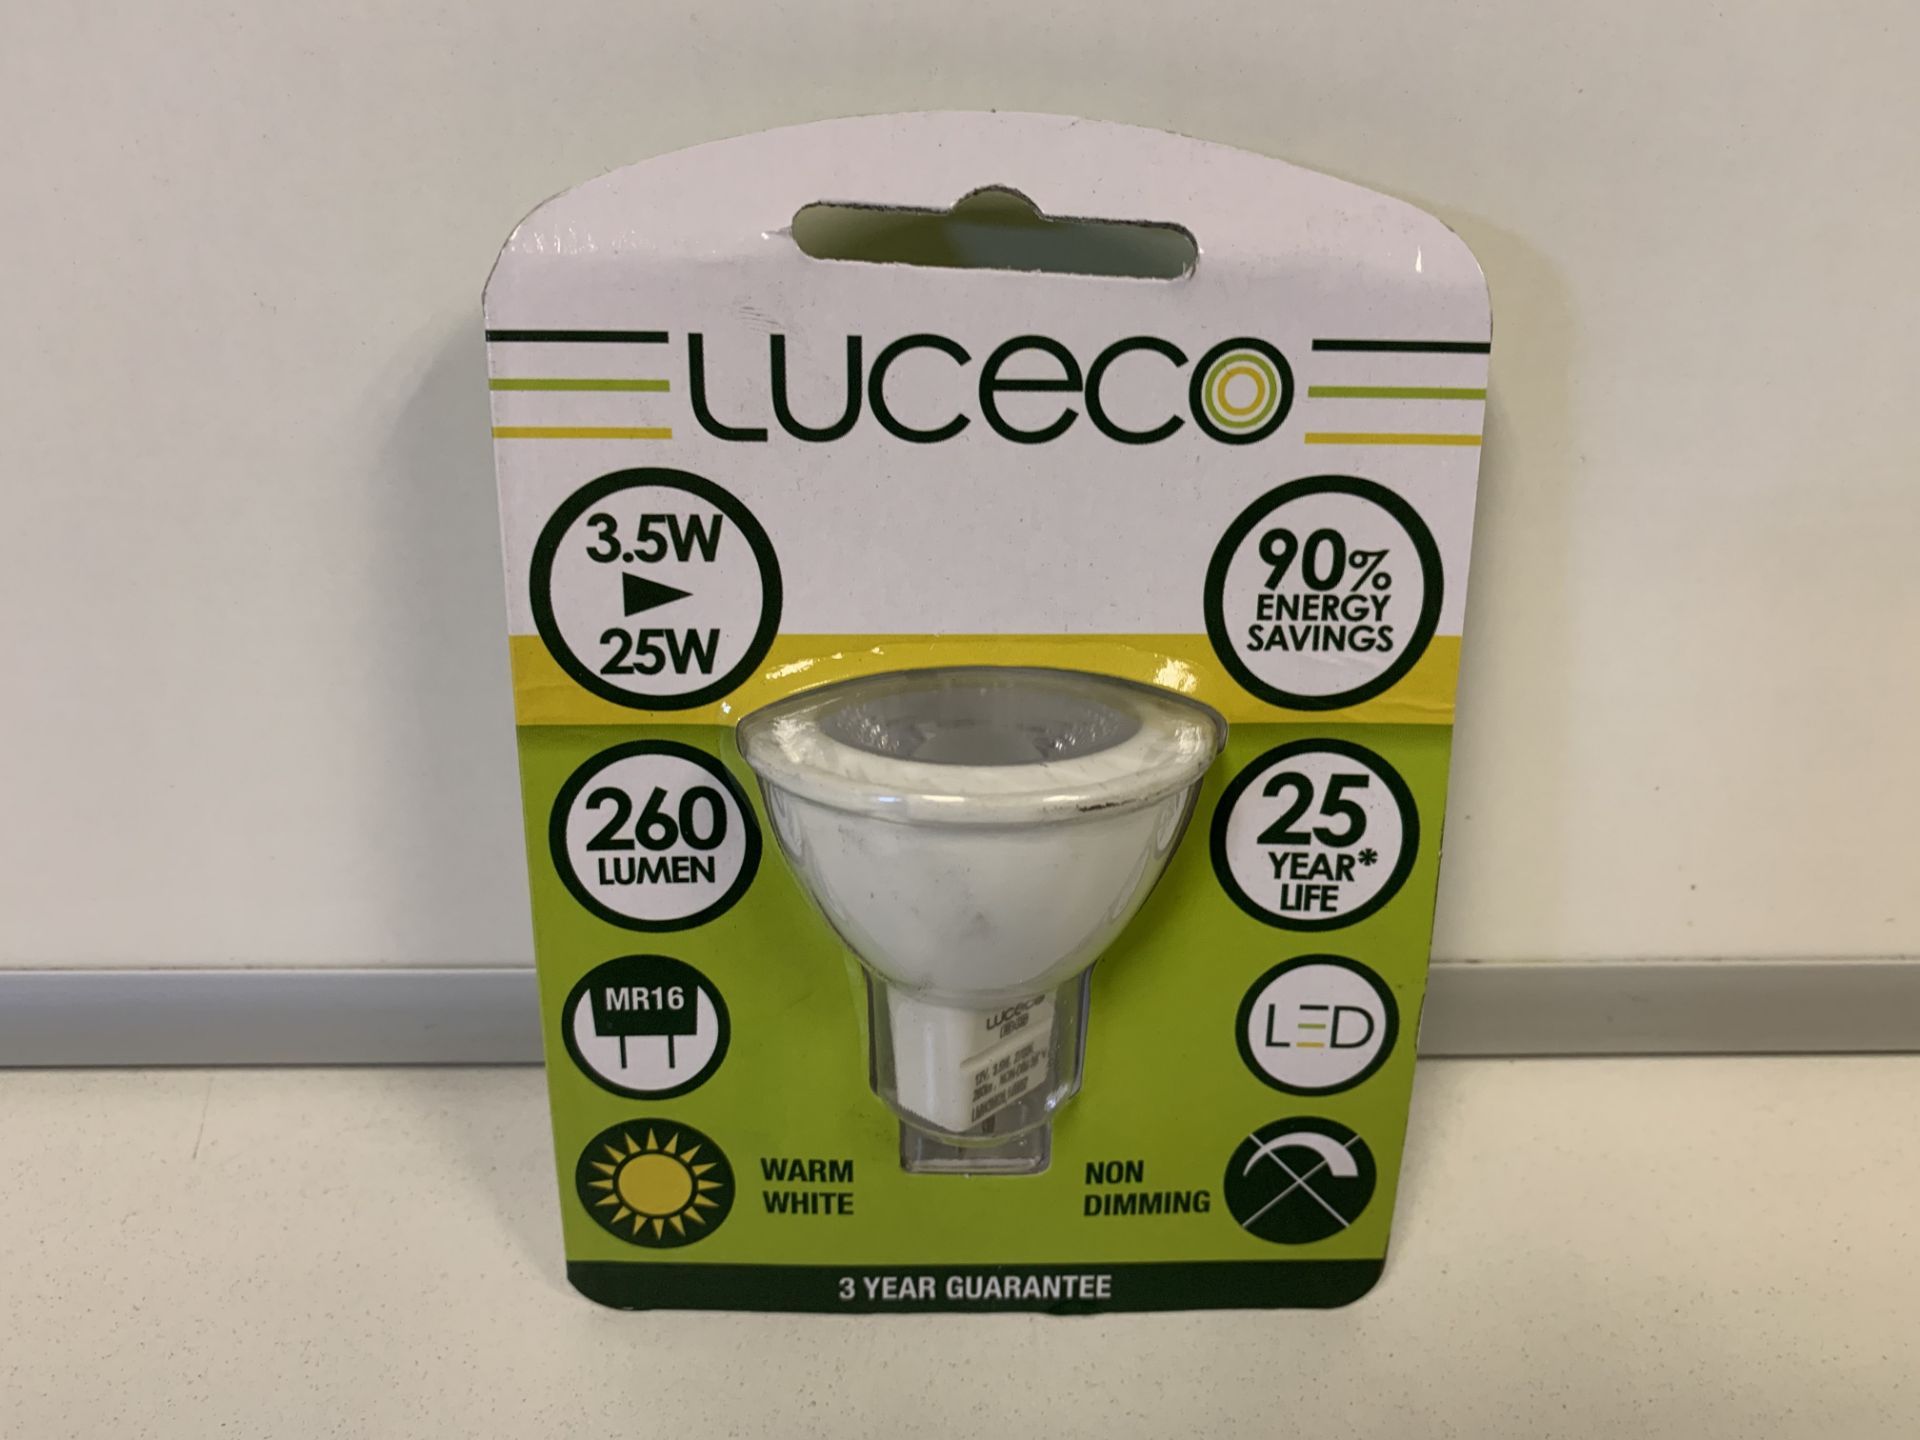 50 x NEW SEALED LUCECO WARM WHITE LED LIGHT BULBS. 3.5W=25W. 260 LUMEN. MR16 FITTING. RRP £9.97 EACH